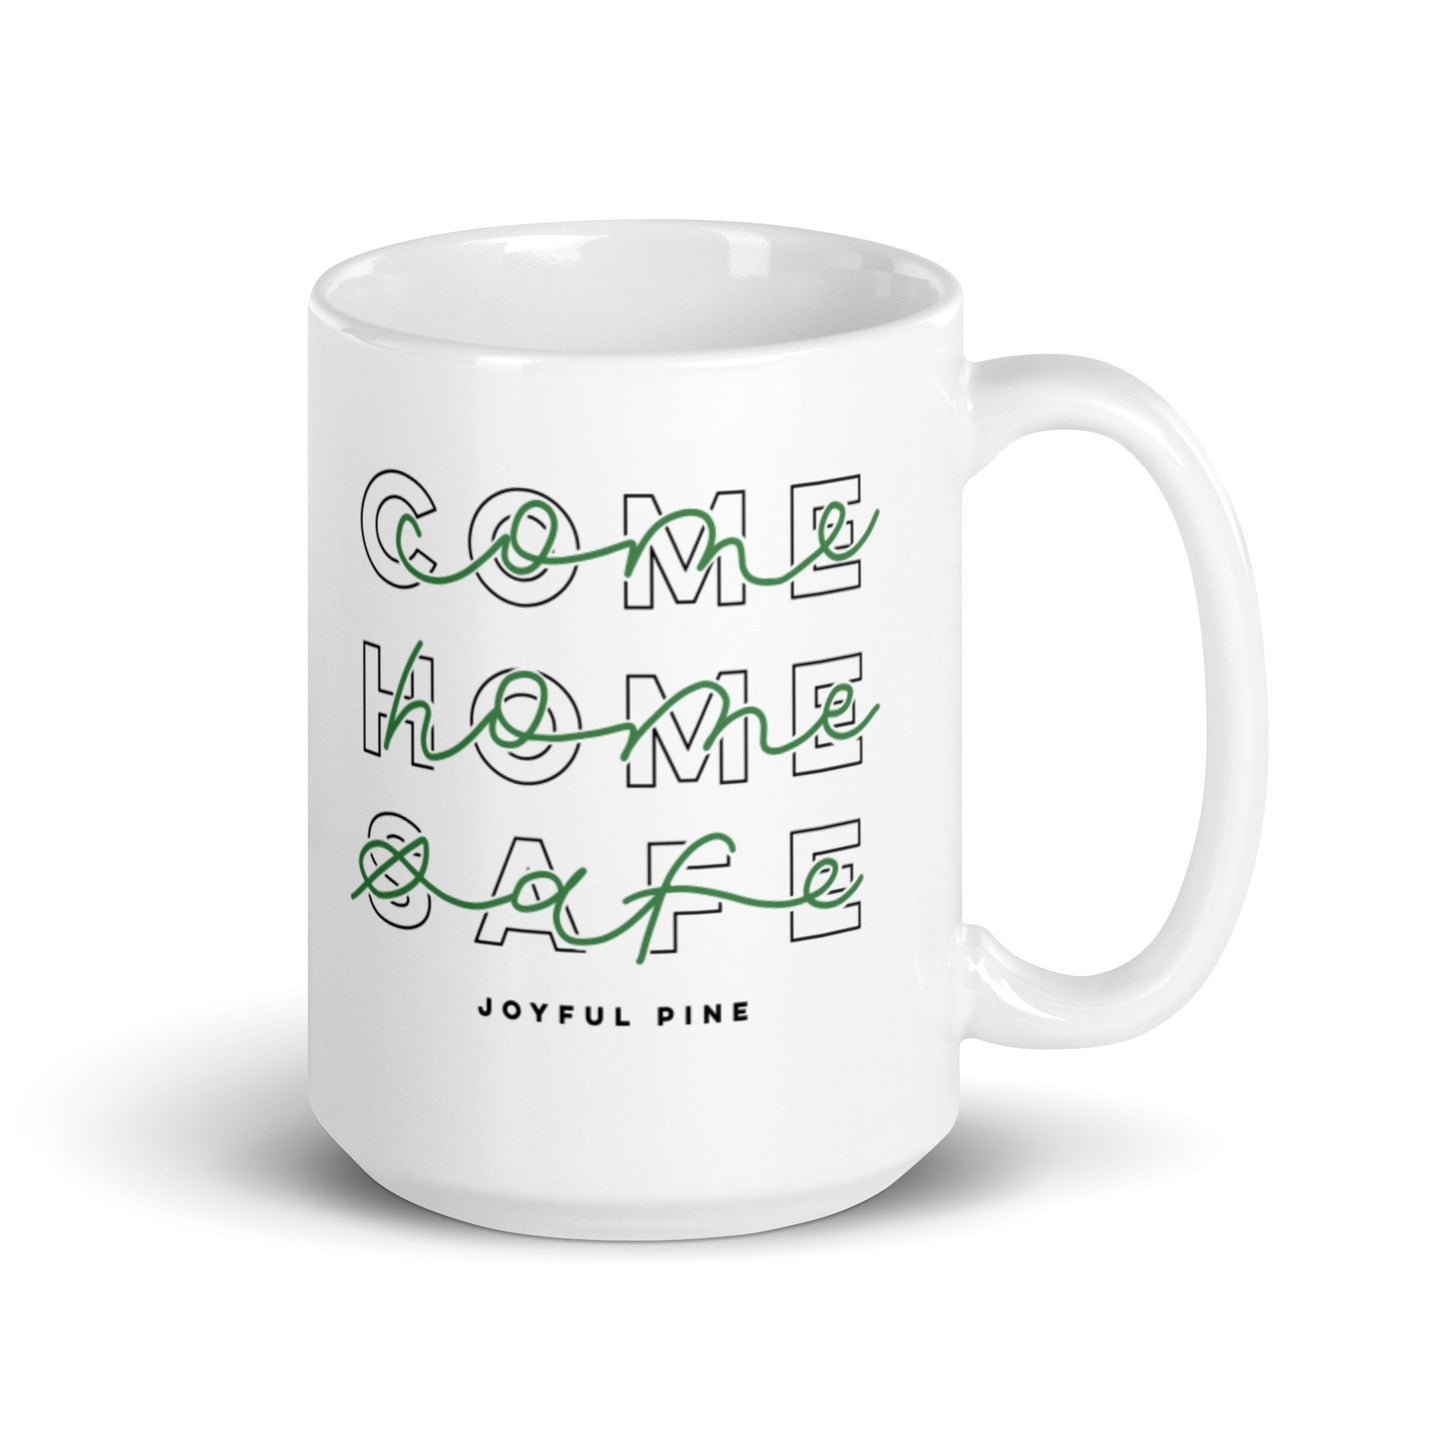 Come Home Safe Mug - Military